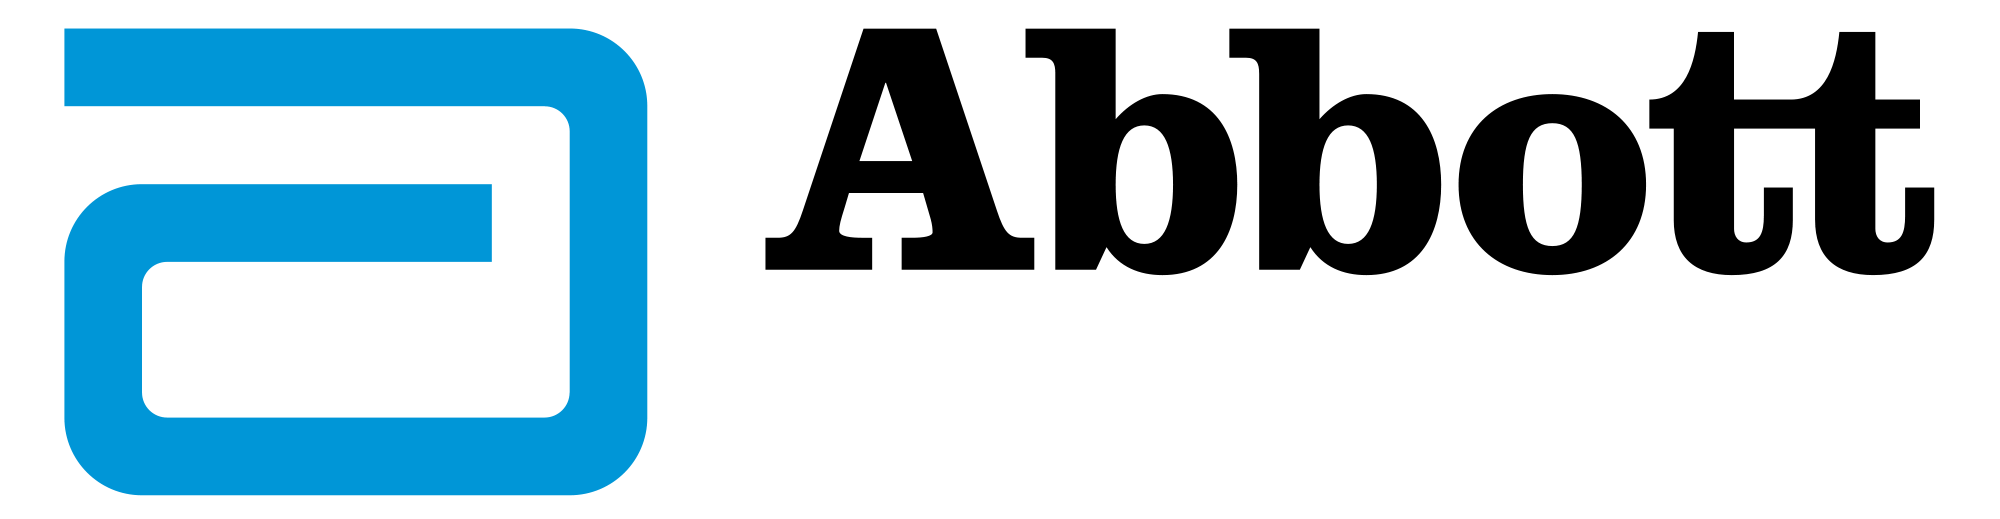 Abbott Laboratories Logo - File:AbbottLaboratories.svg - Wikimedia Commons